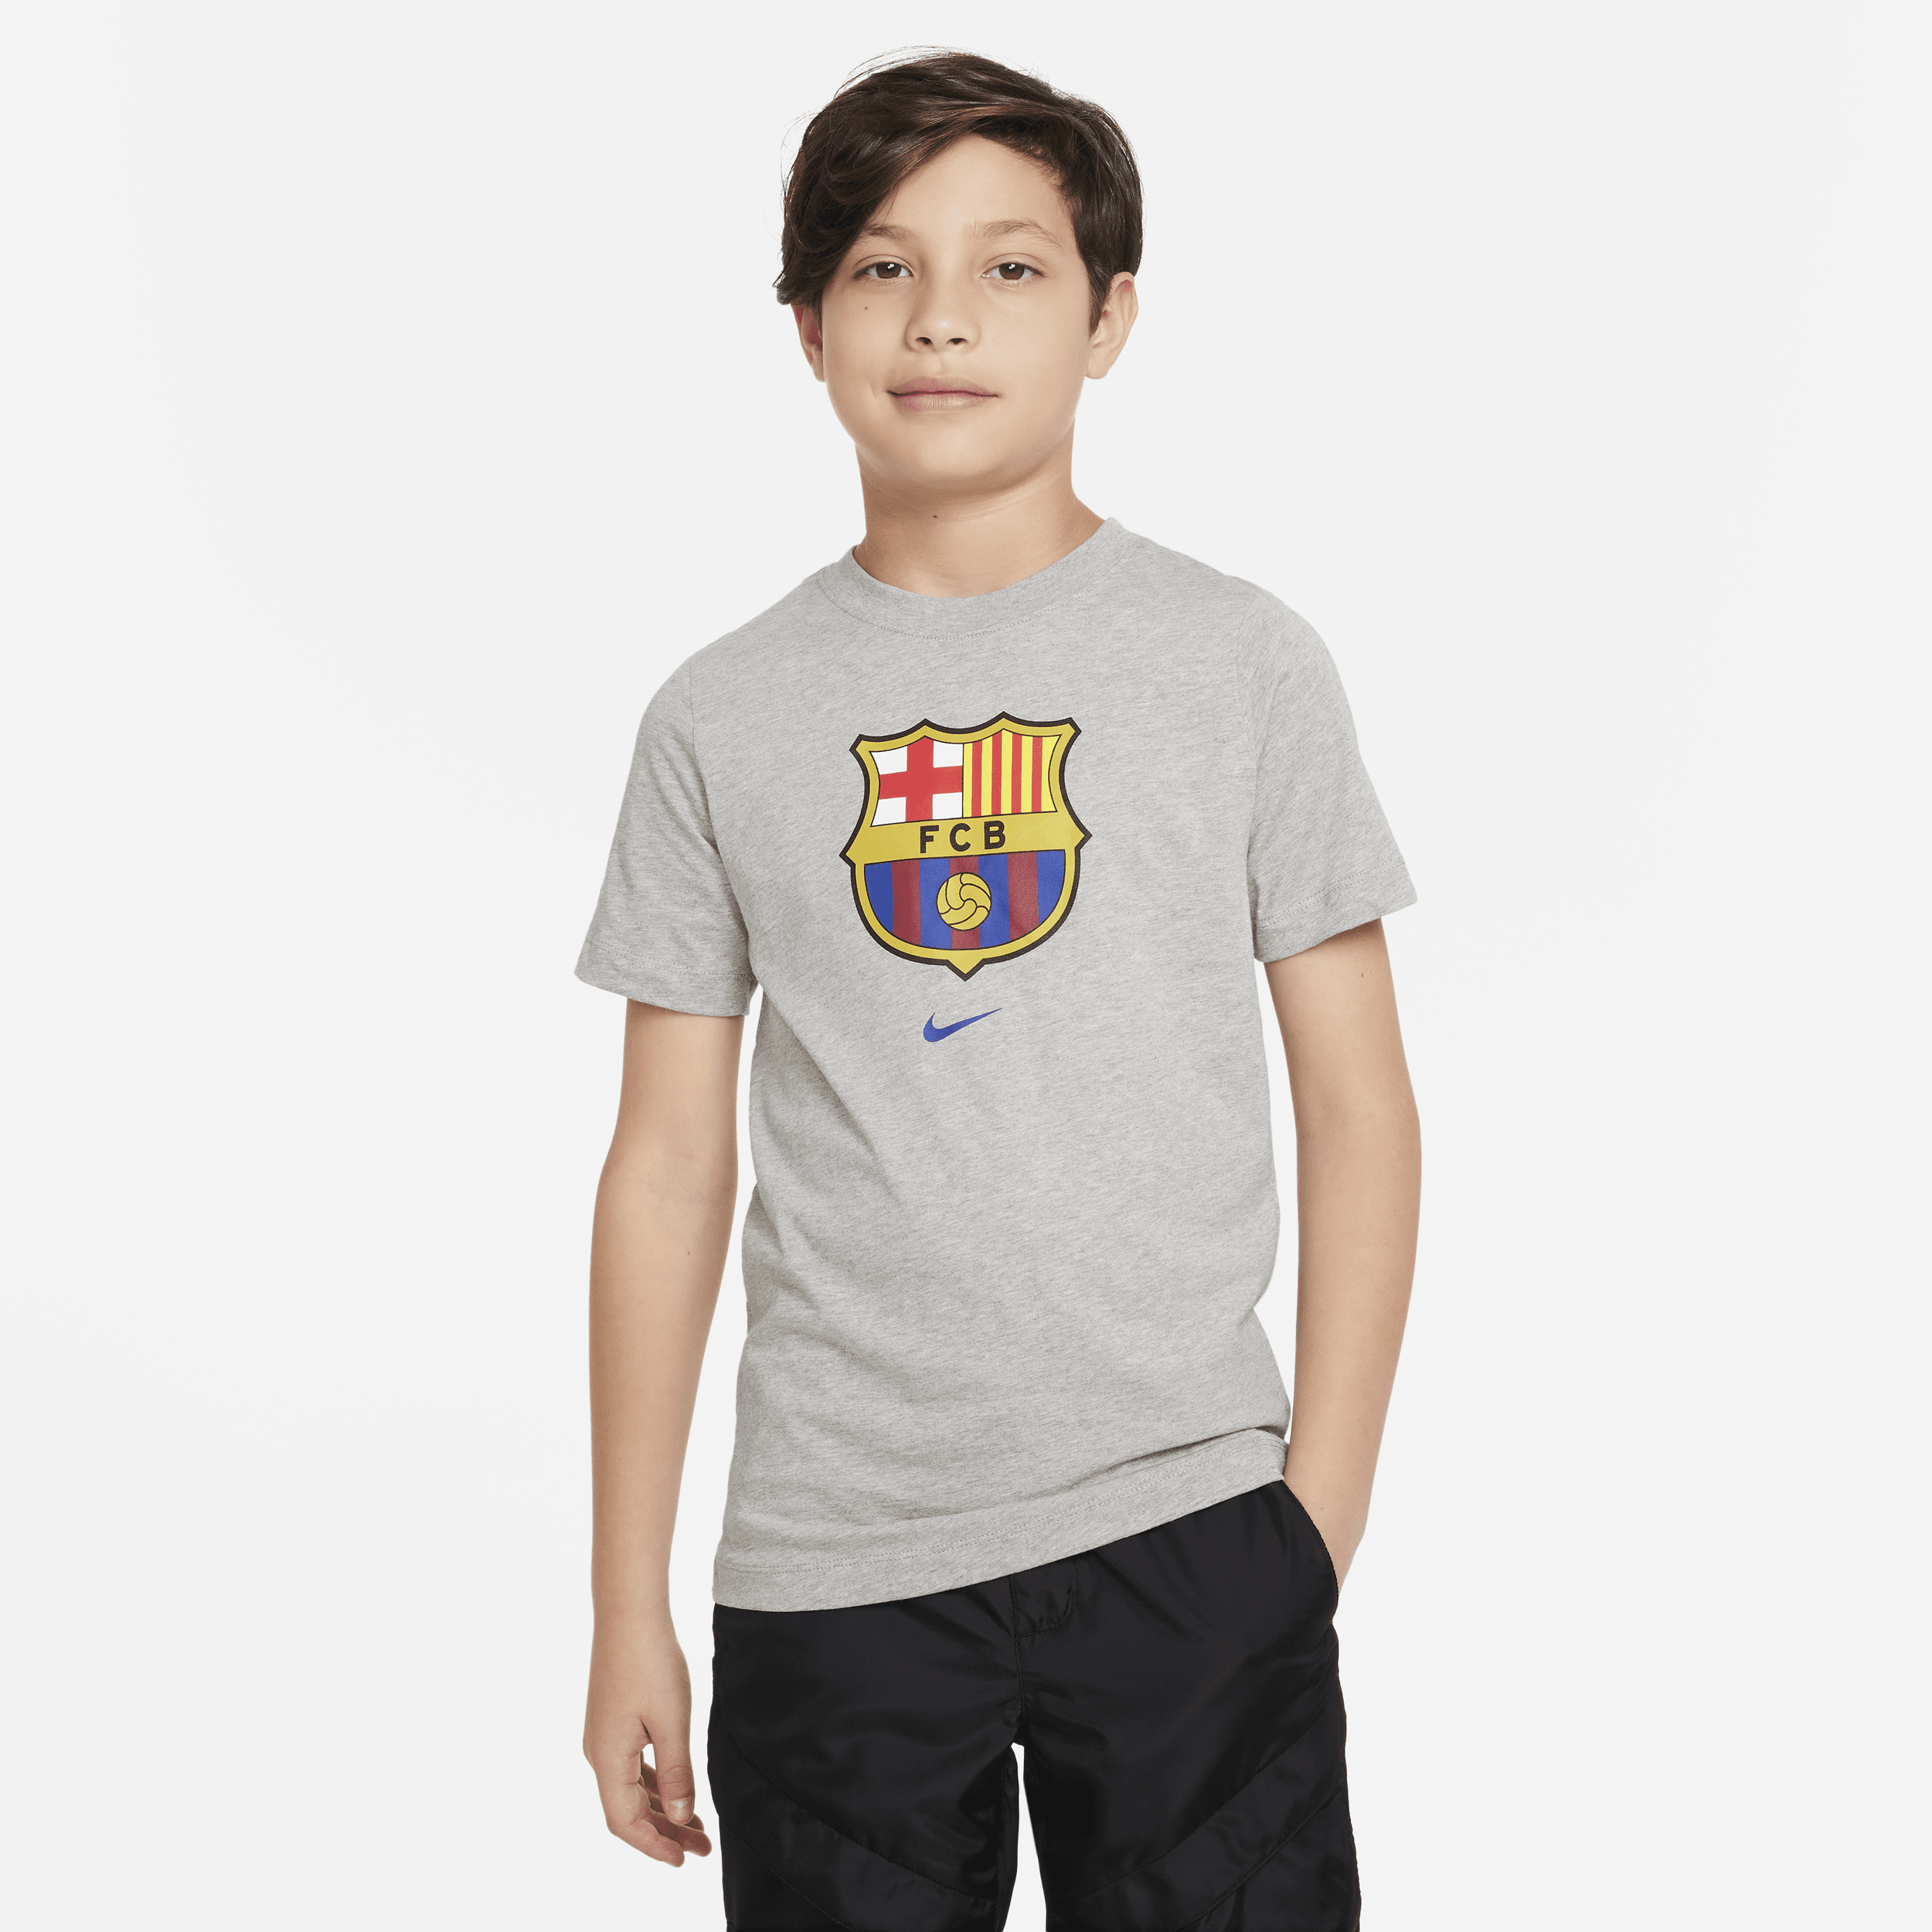 FC Barcelona Crest Camiseta Nike - Niño/a - Gris